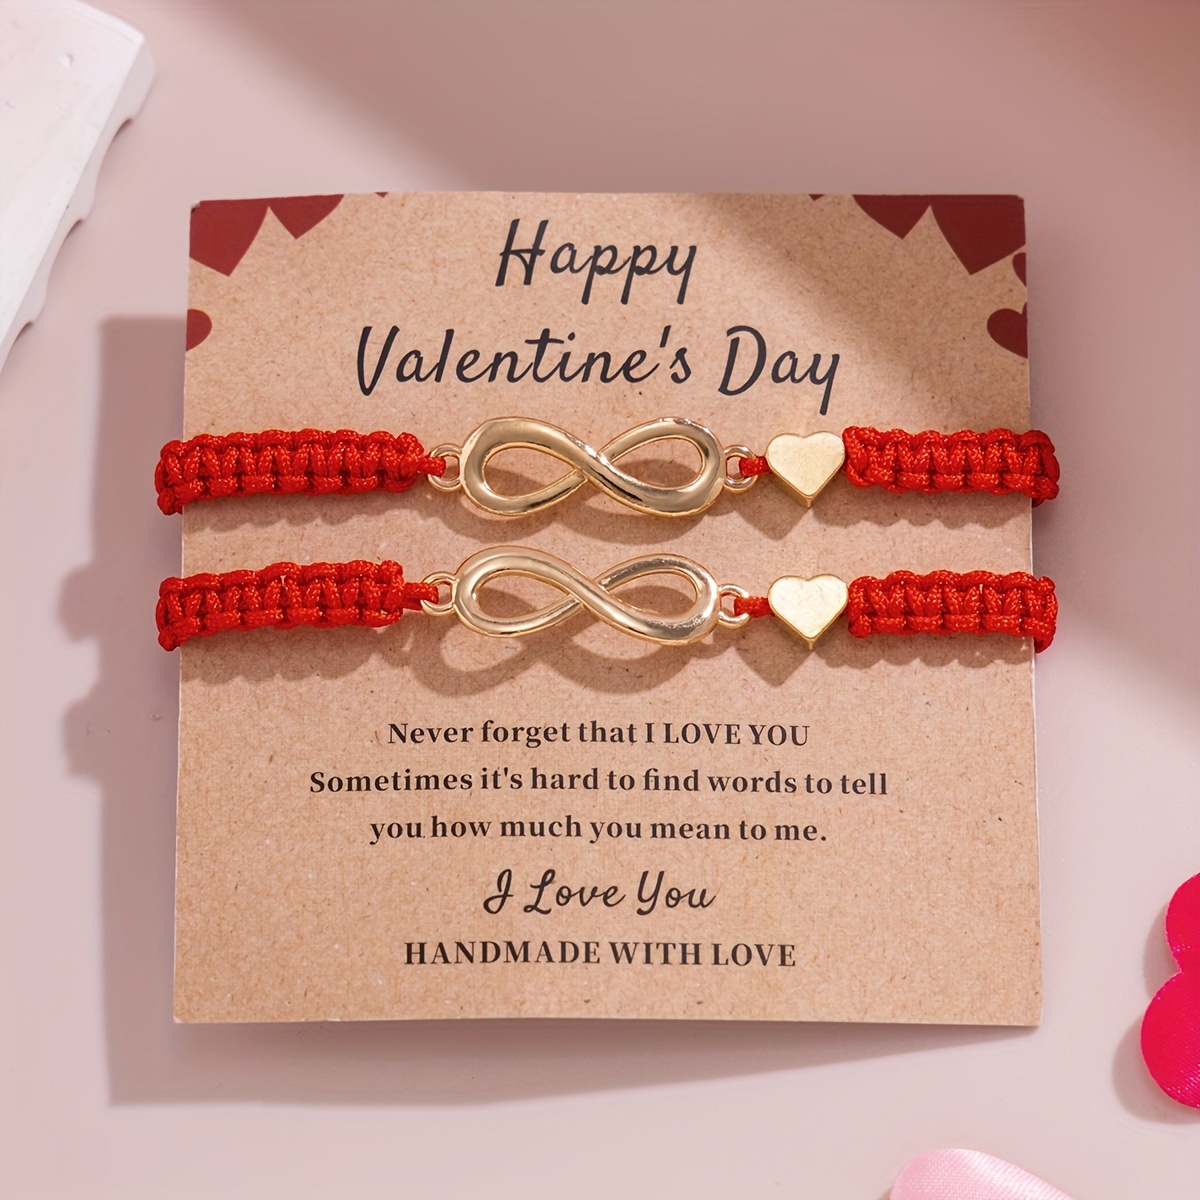 

2pcs/set Handmade Braided Red Rope Love Letter Adjustable Bracelet Valentine's Day Gift For Girlfriend Holiday Gift Elegant Jewelry Bracelet + Blessing Card